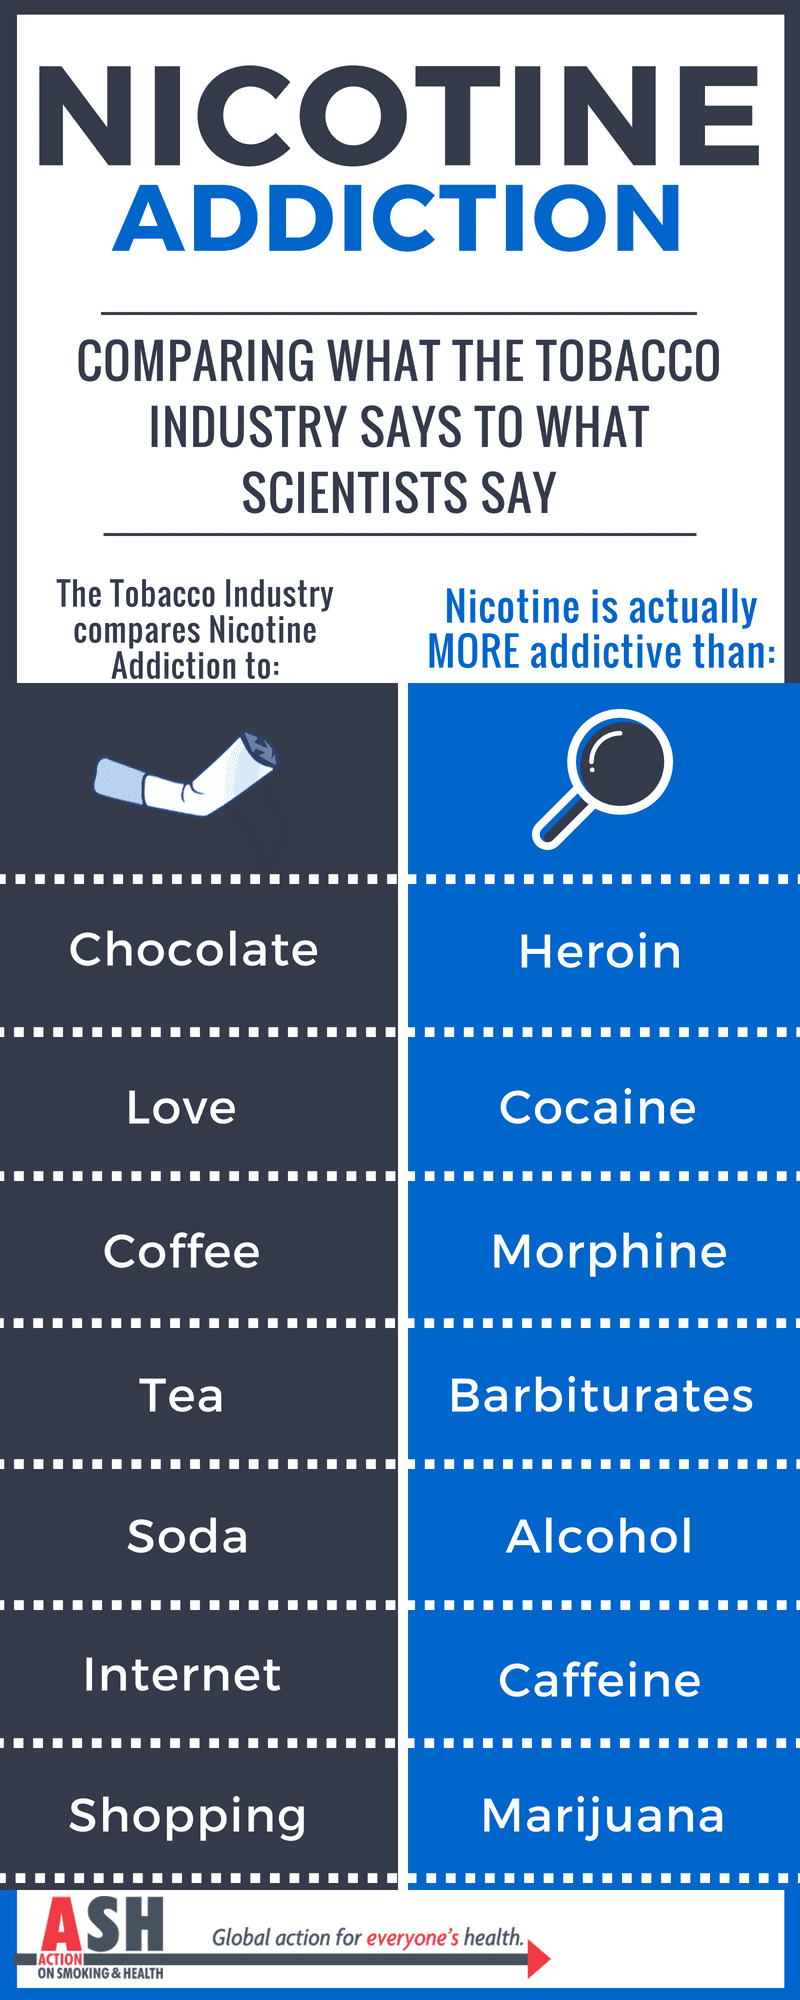 Is Caffeine More Addictive Than Nicotine?